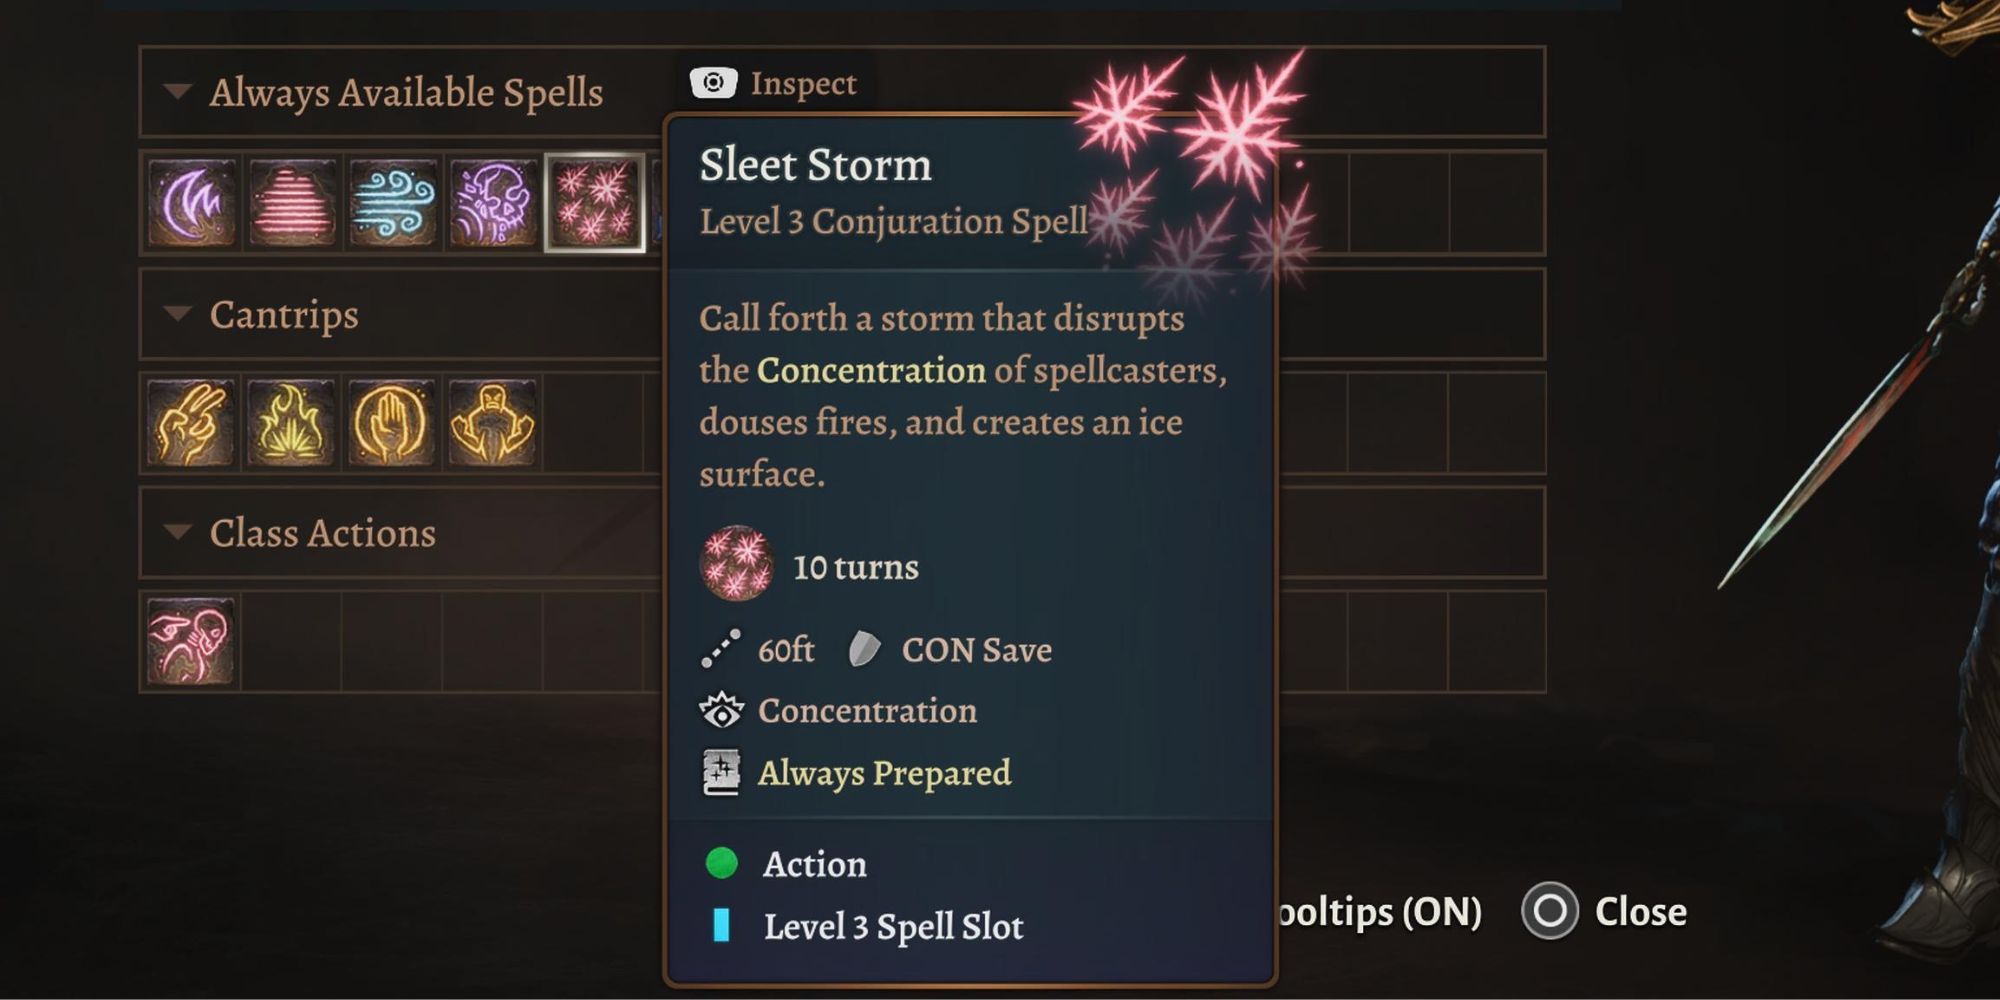 The Sleet Storm spell in Baldur’s Gate 3